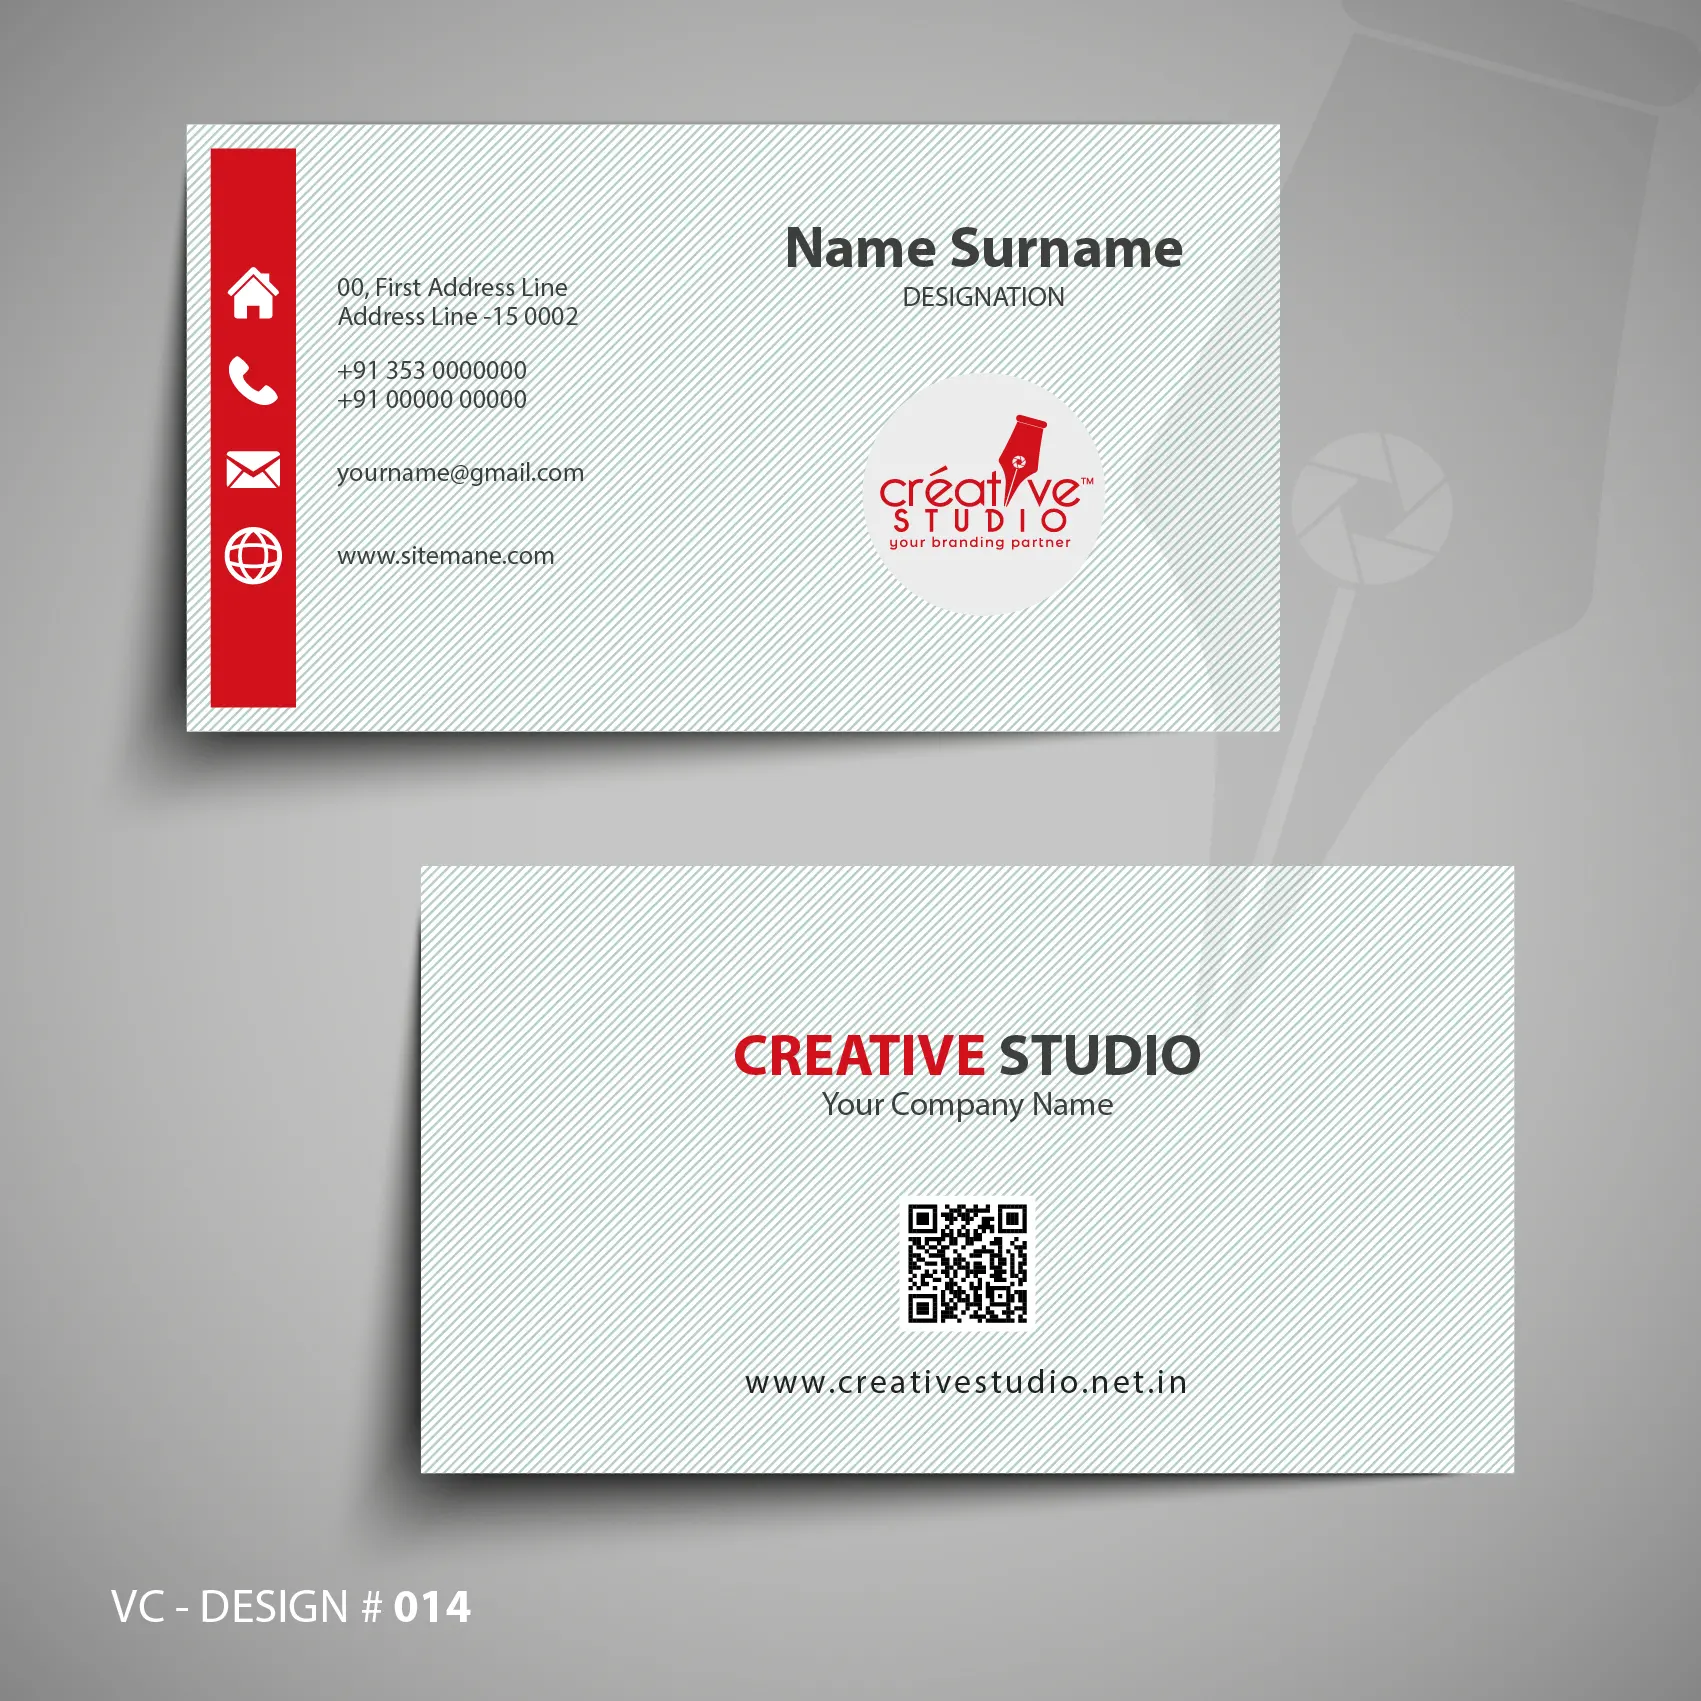 VC DESIGN 014 01 - Visiting Card Portfolio by Creative Studio